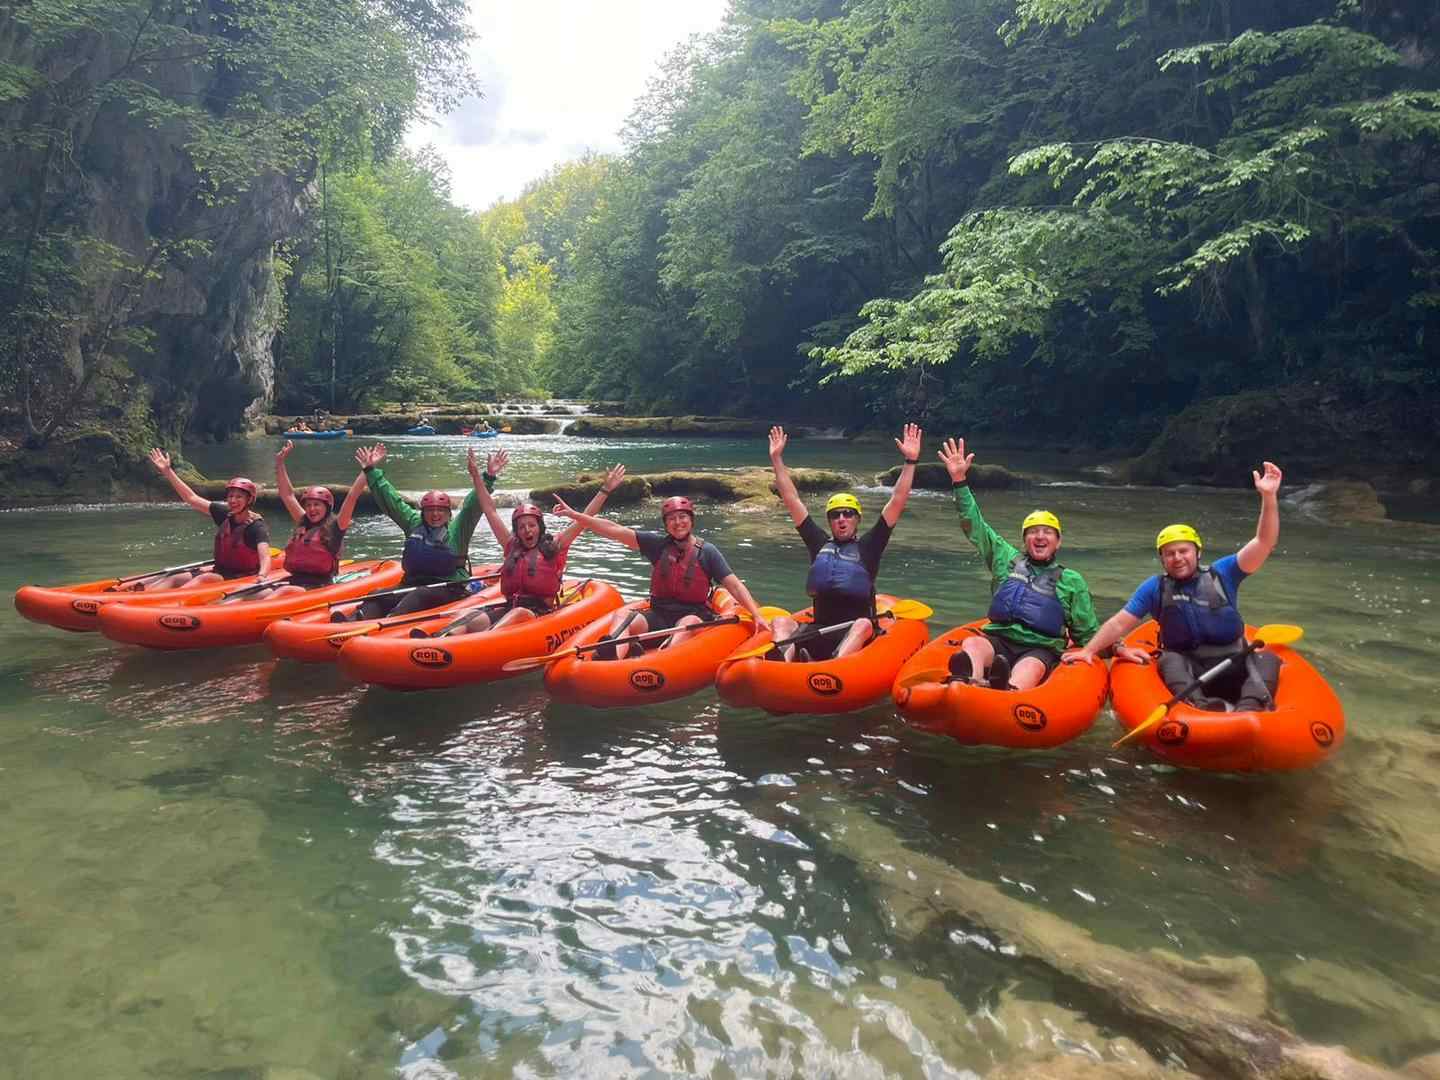 Over 50's pack rafting in Croatia!